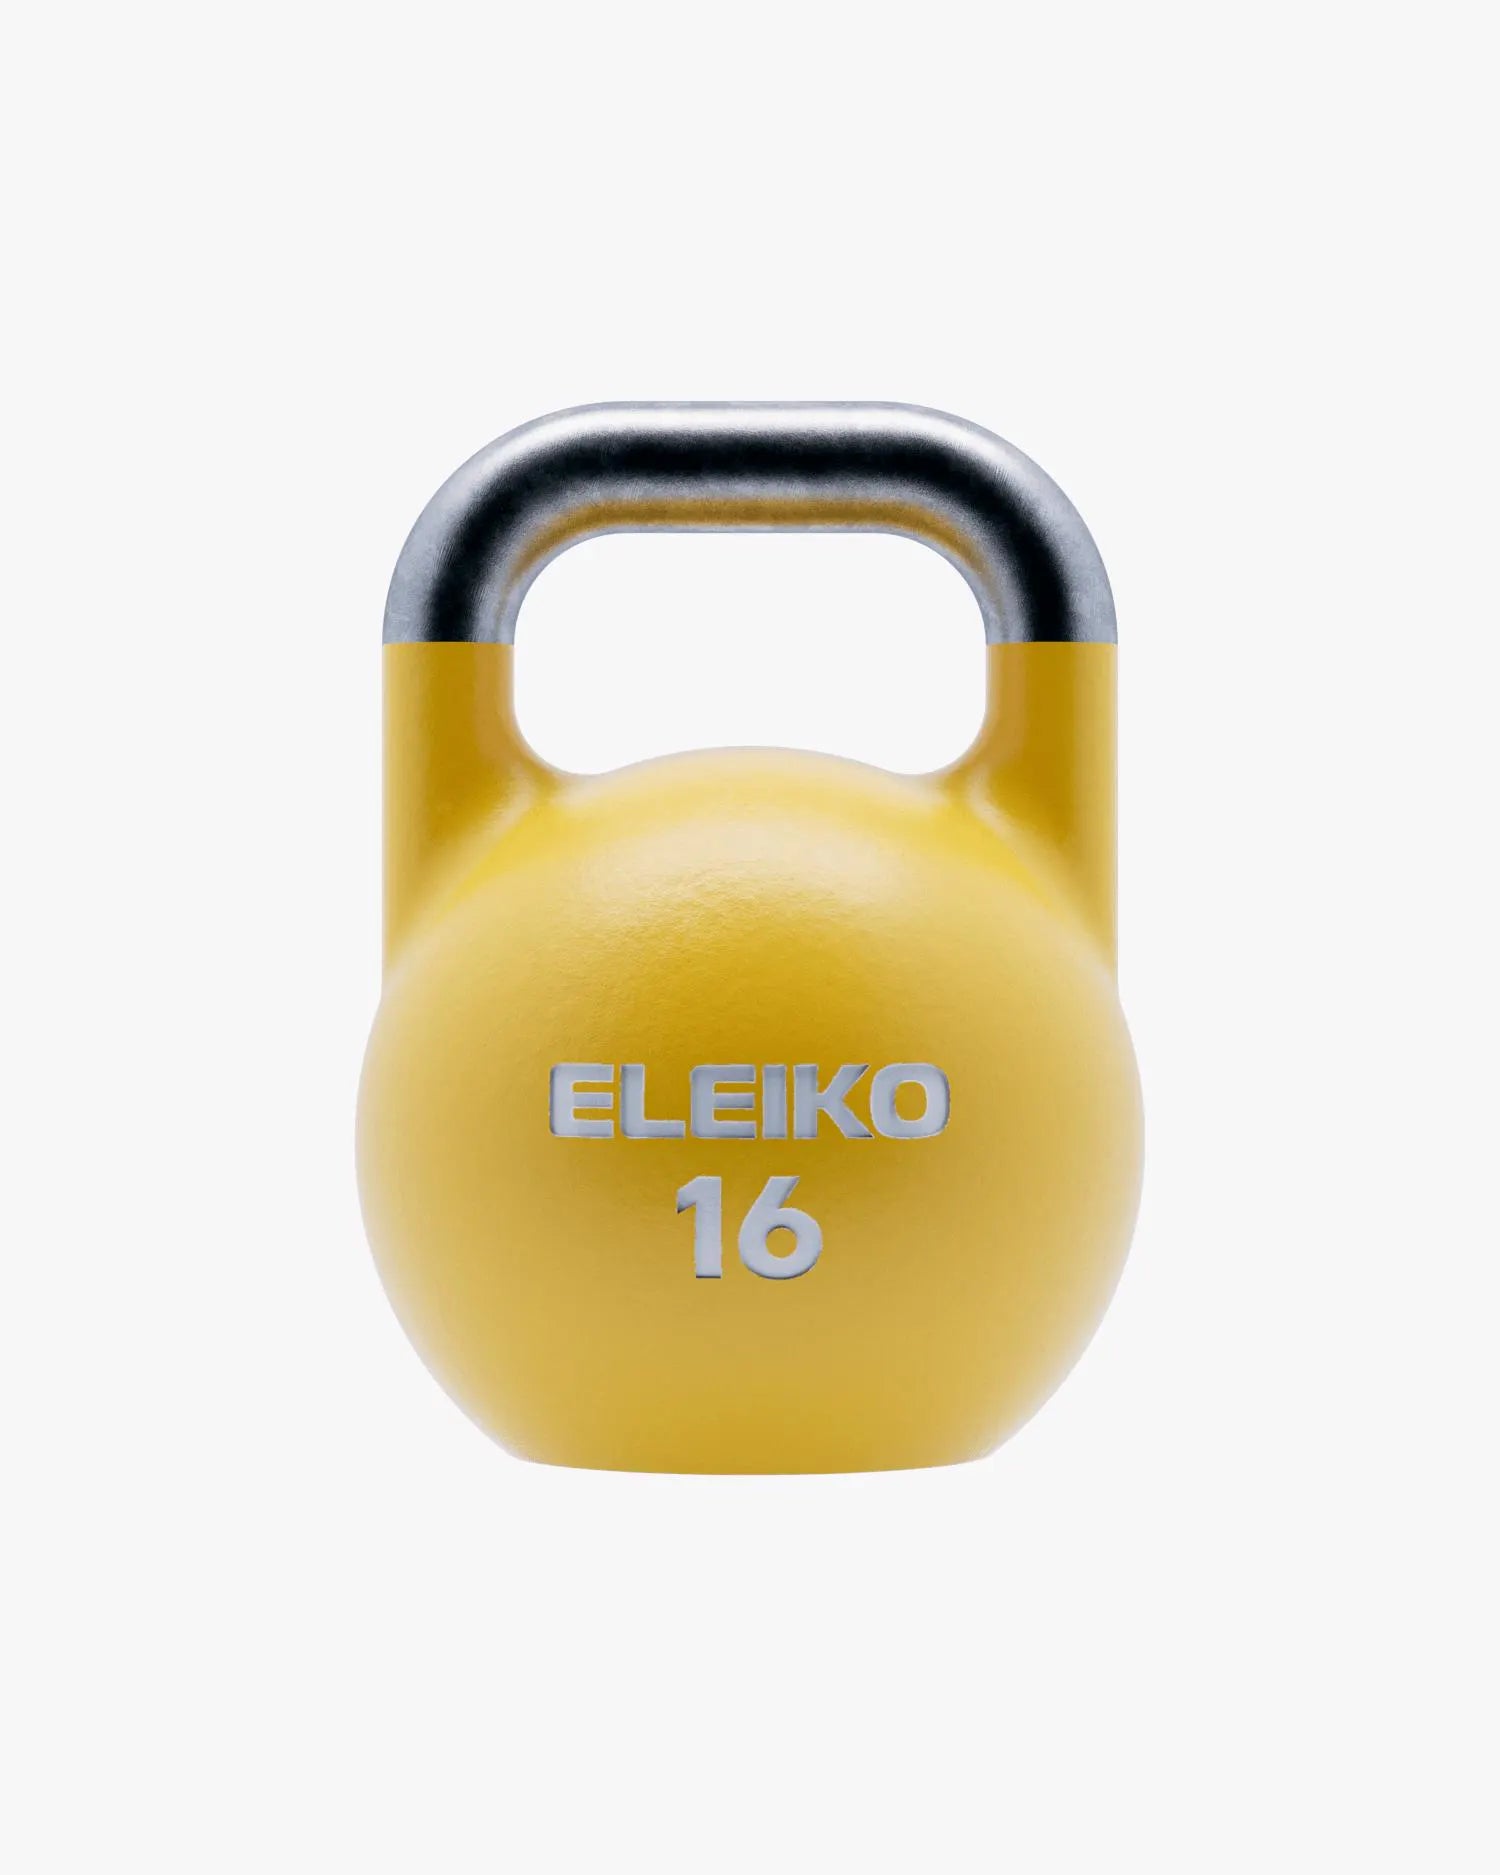 Eleiko 16 kg competition kettlebell